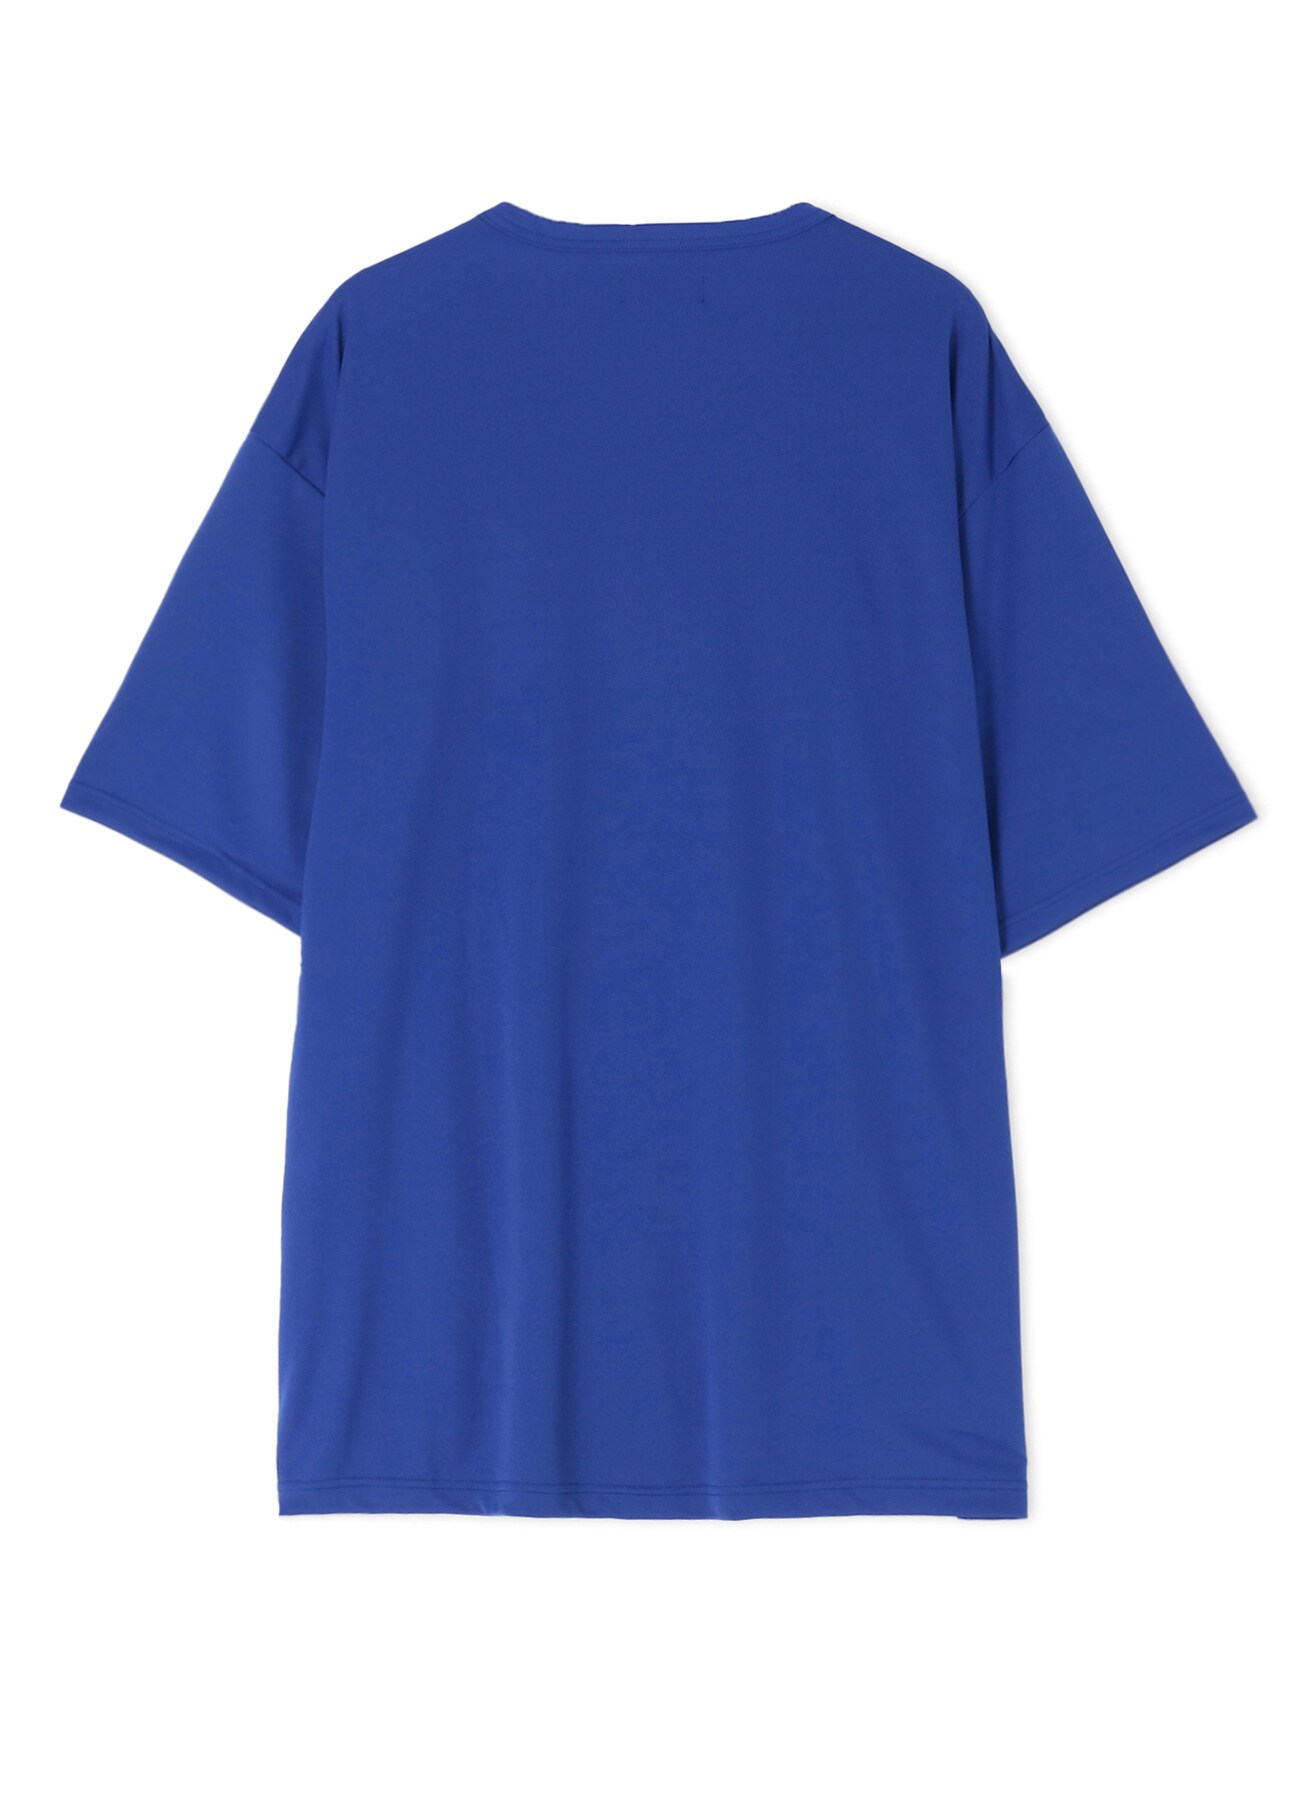 Thin Smooth Jersey Crew Neck Half-Layered  Short Sleeve T-Shirt